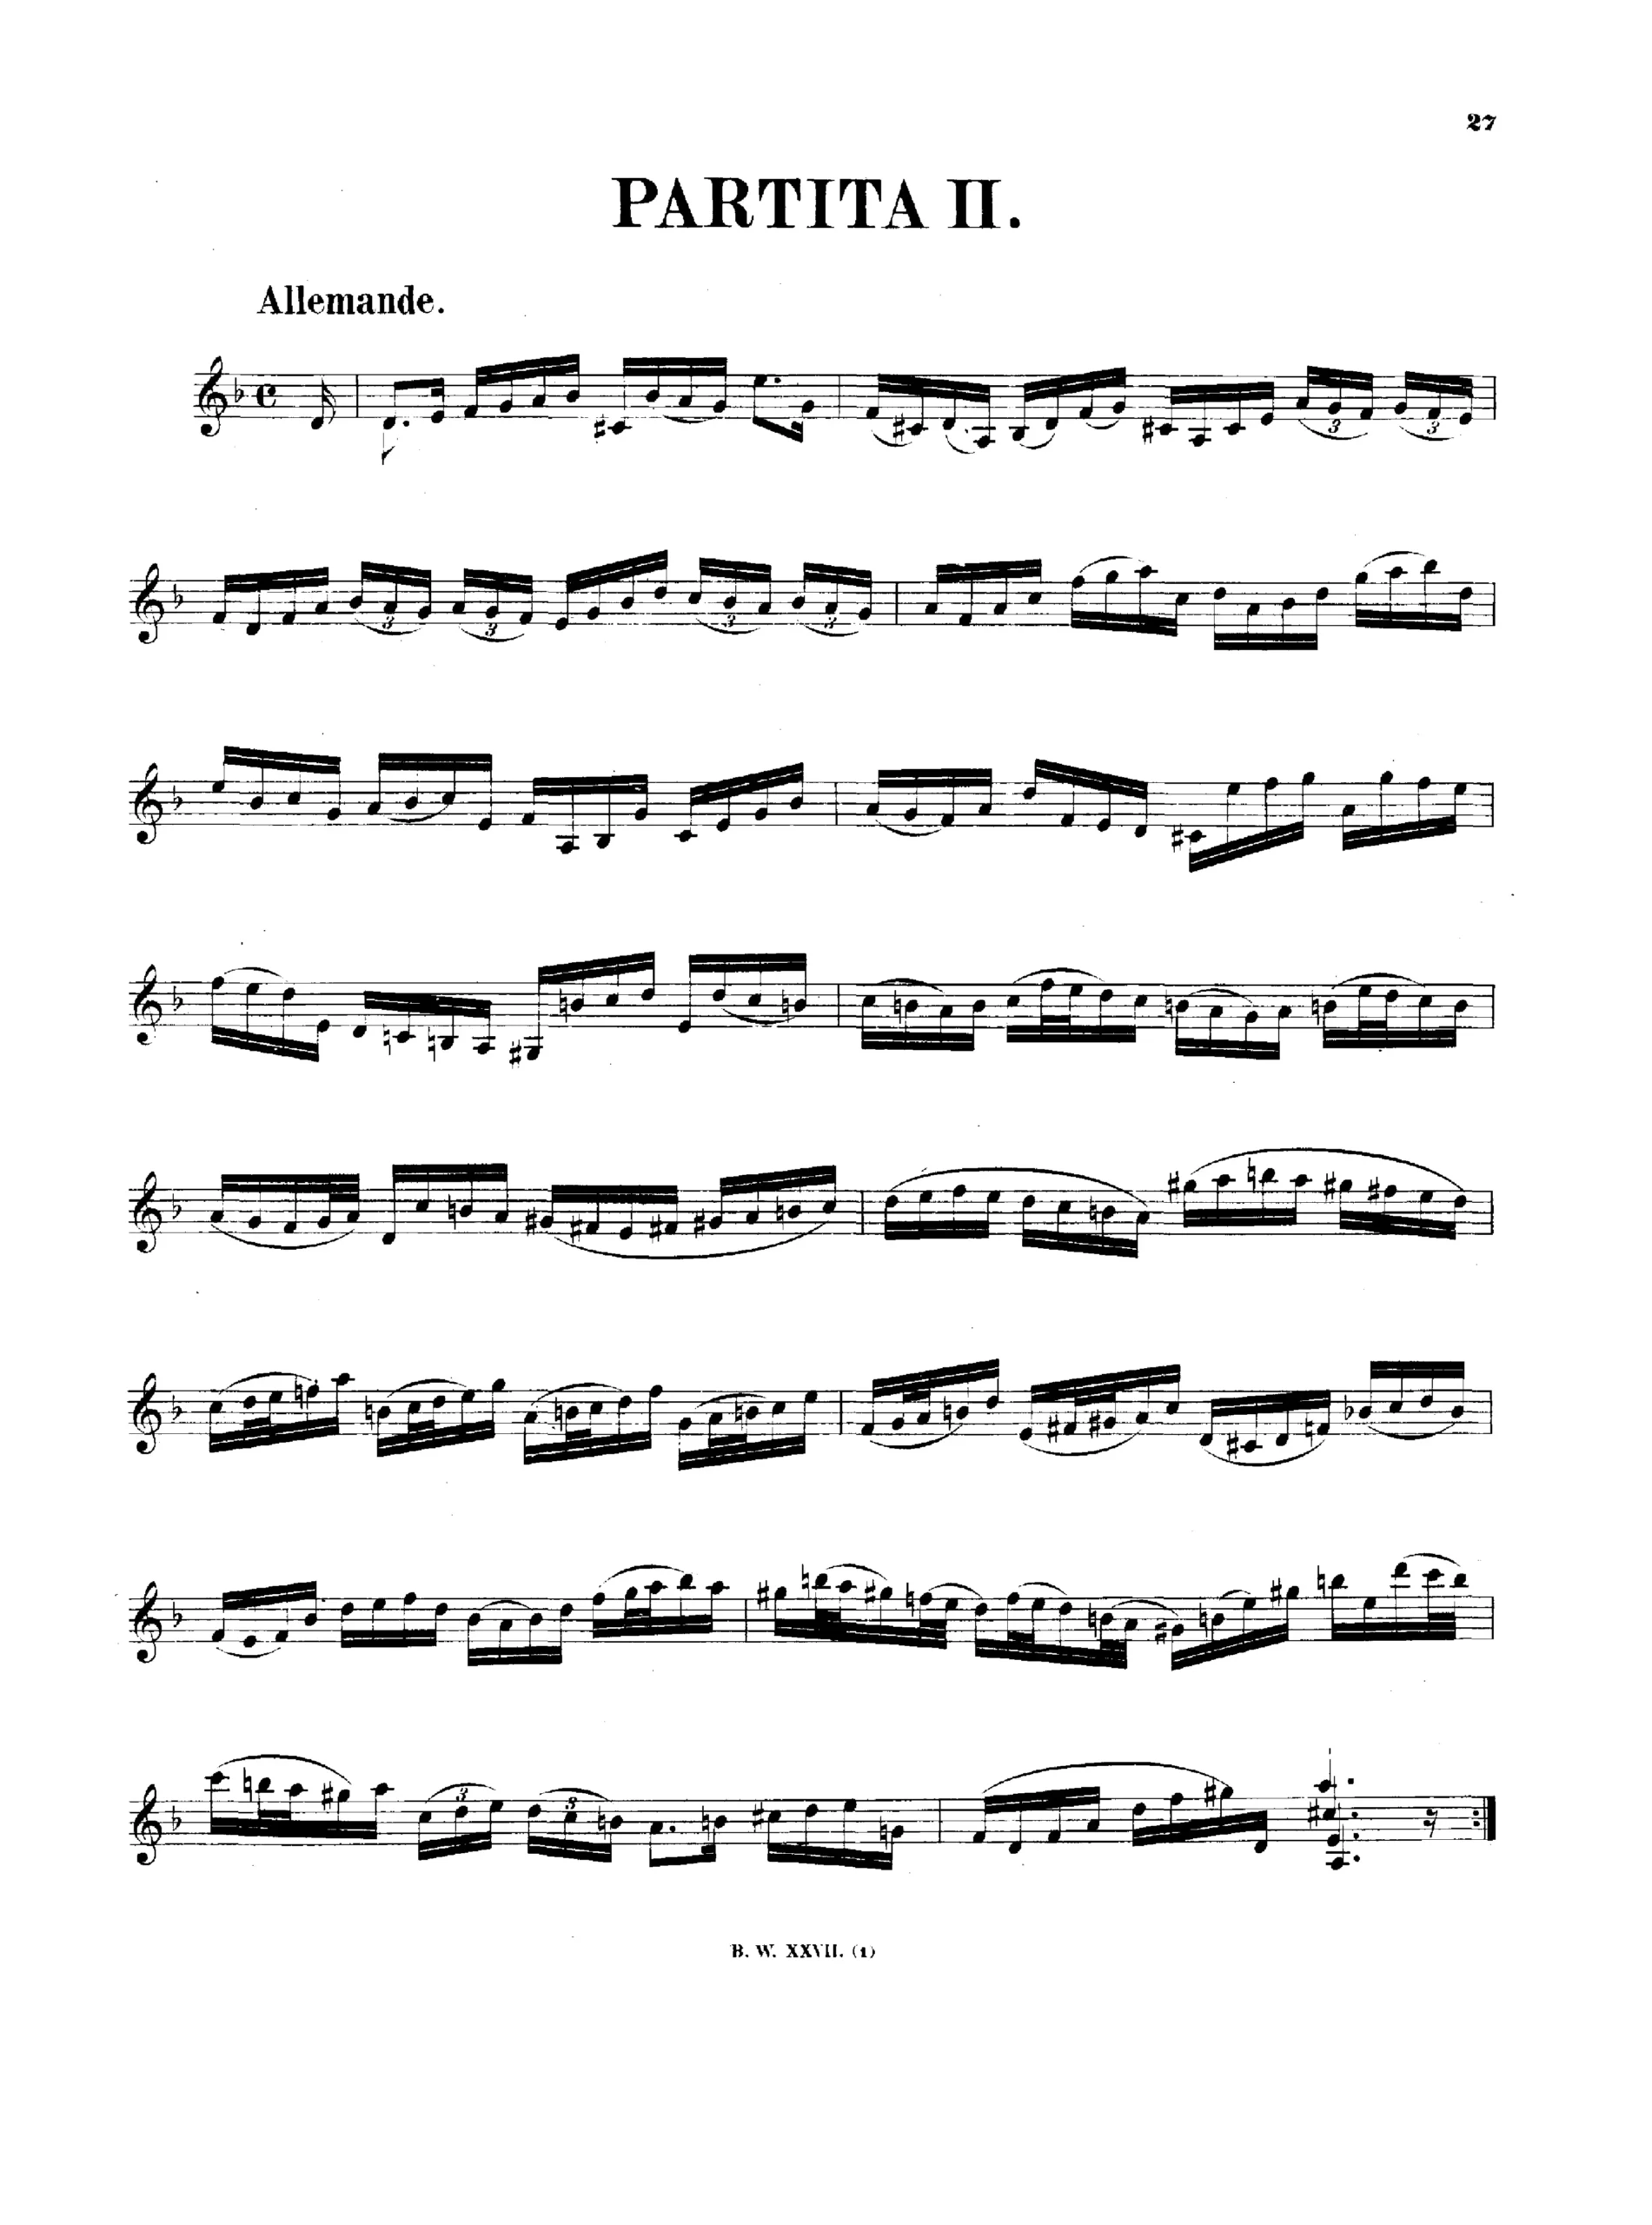 bach partita violin d minor allemande imslp - What is the hardest Bach fugue violin